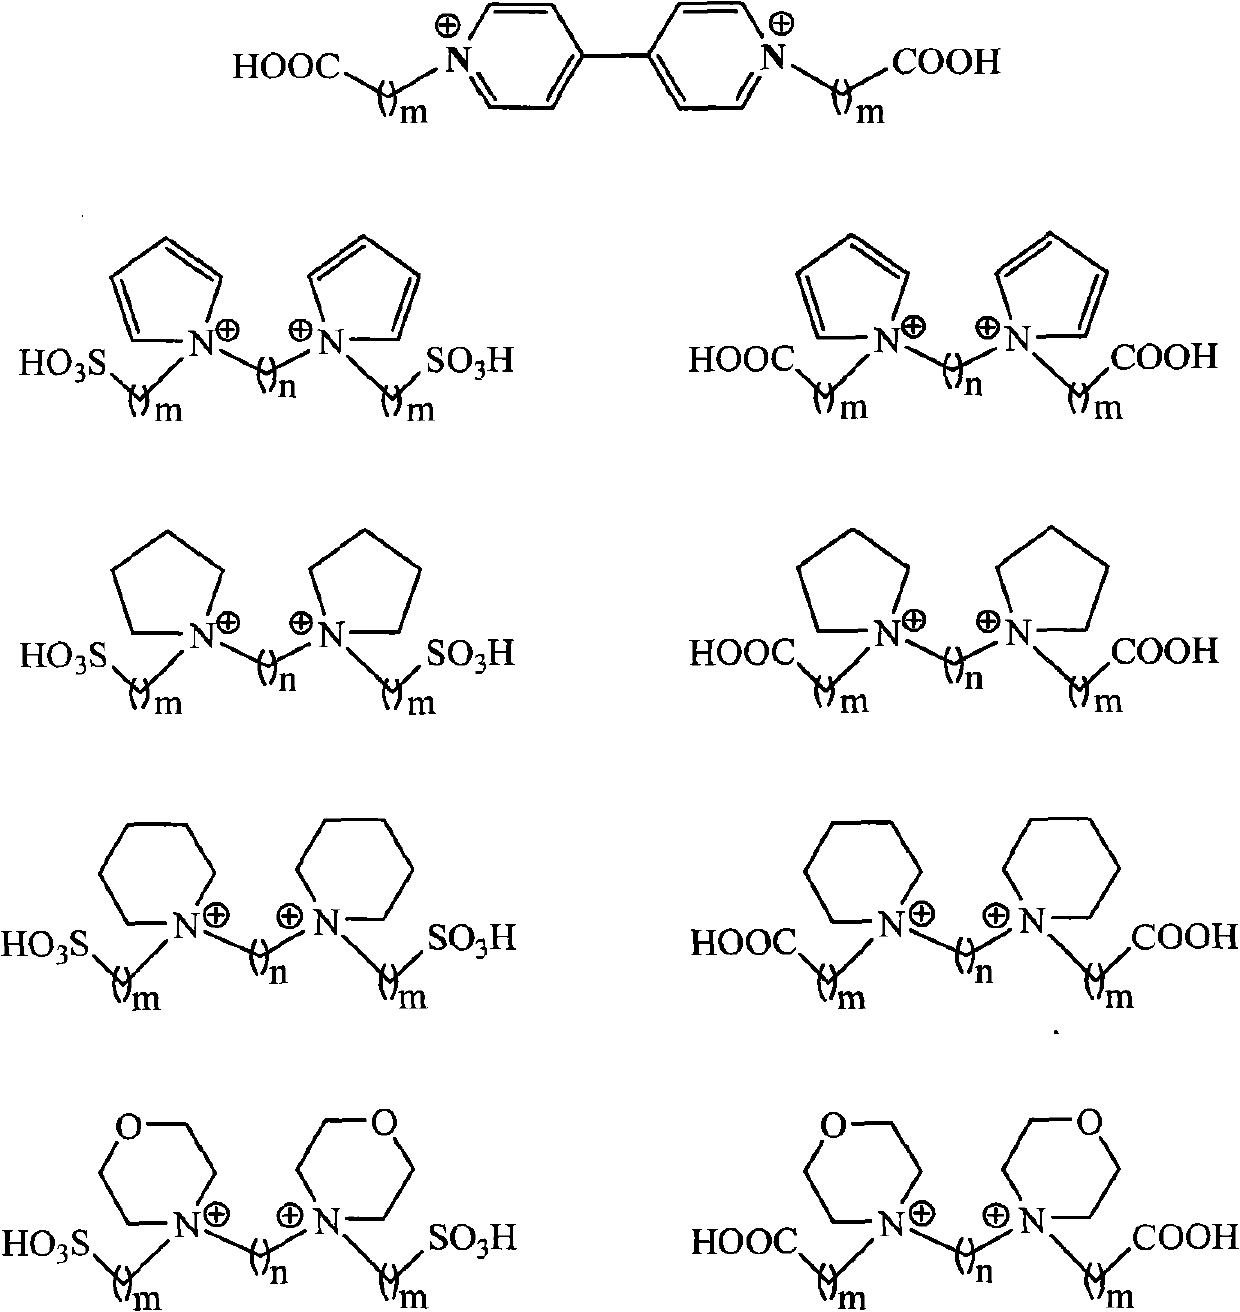 Method for synthesizing trioxymethylene by catalyzing formaldehyde cyclization reaction through bifunctional ionic liquid